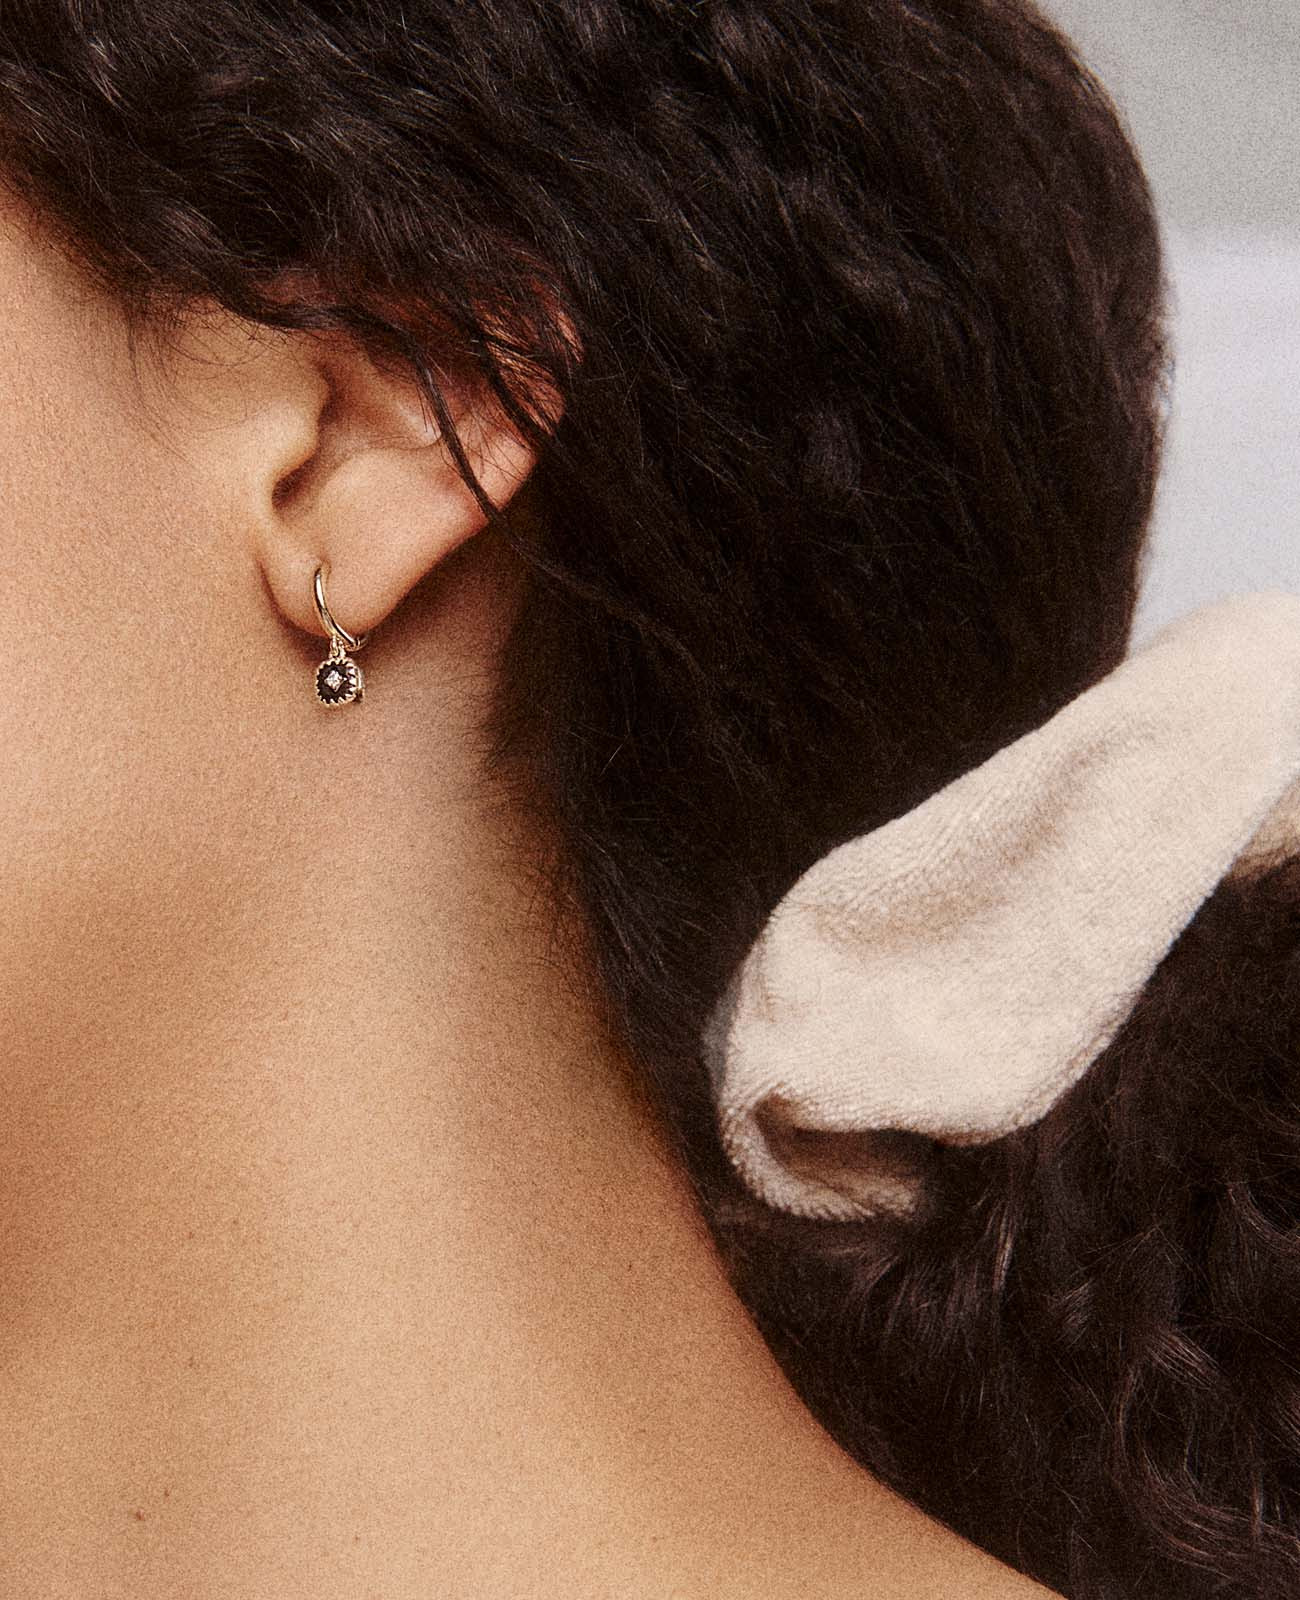 PIERROT BLACK earring pascale monvoisin jewelry paris